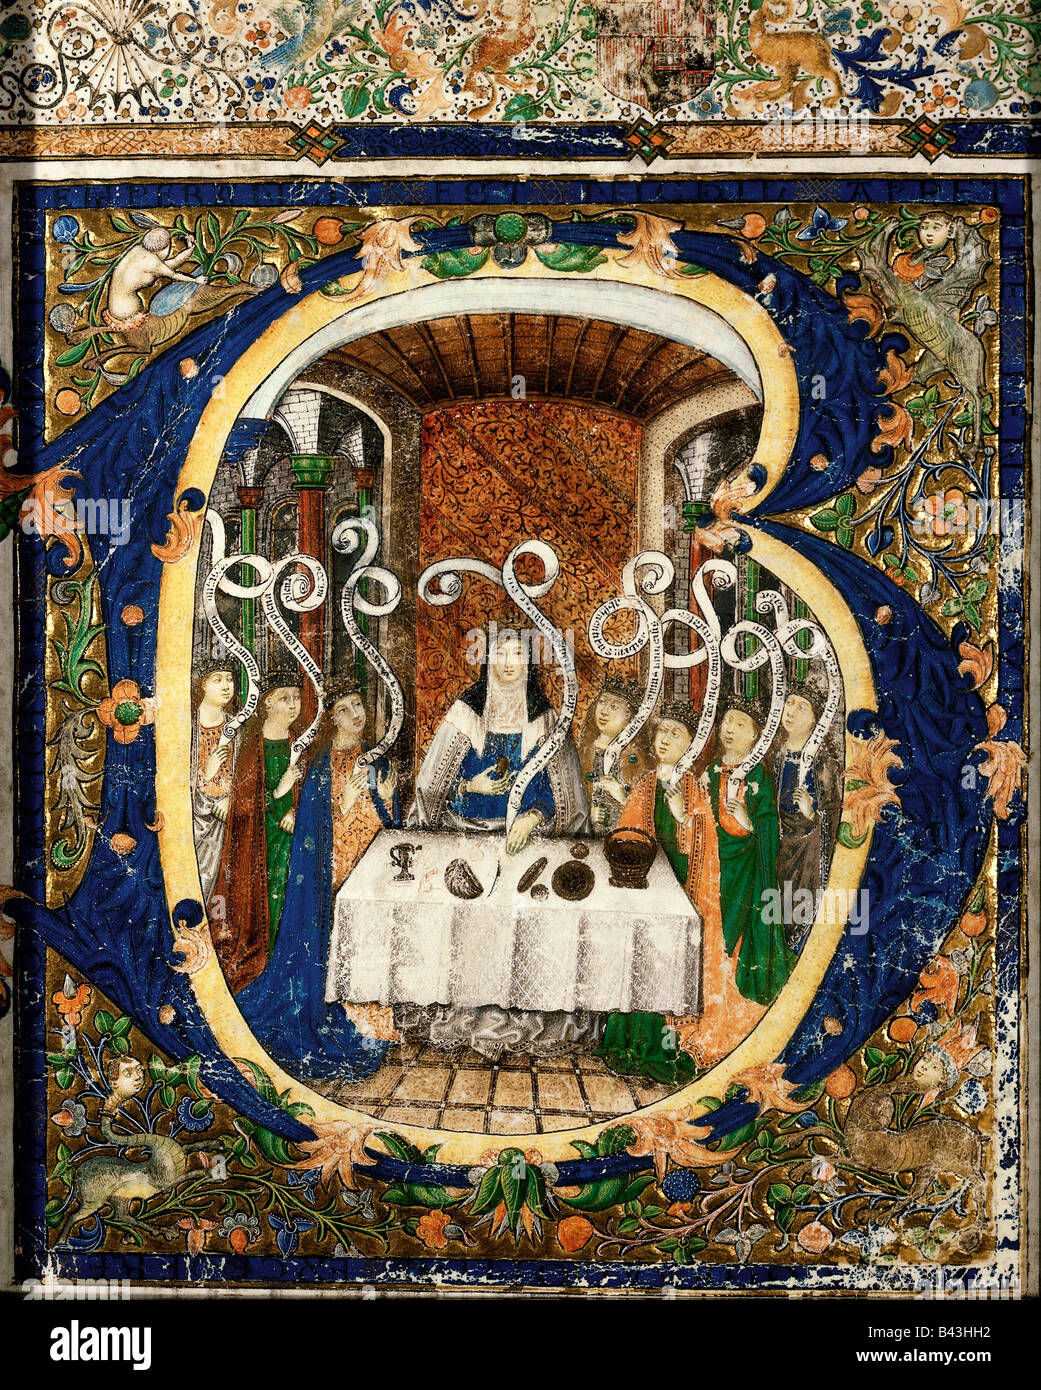 Elisabteh of Hungary, 1207 - 17.11.1231, Saint, countess of Andechs-Merania, illumination, vellum, circa 1420, 28 x 34,5 cm, Deutsches Brotmuseum Ulm, Germany, Stock Photo